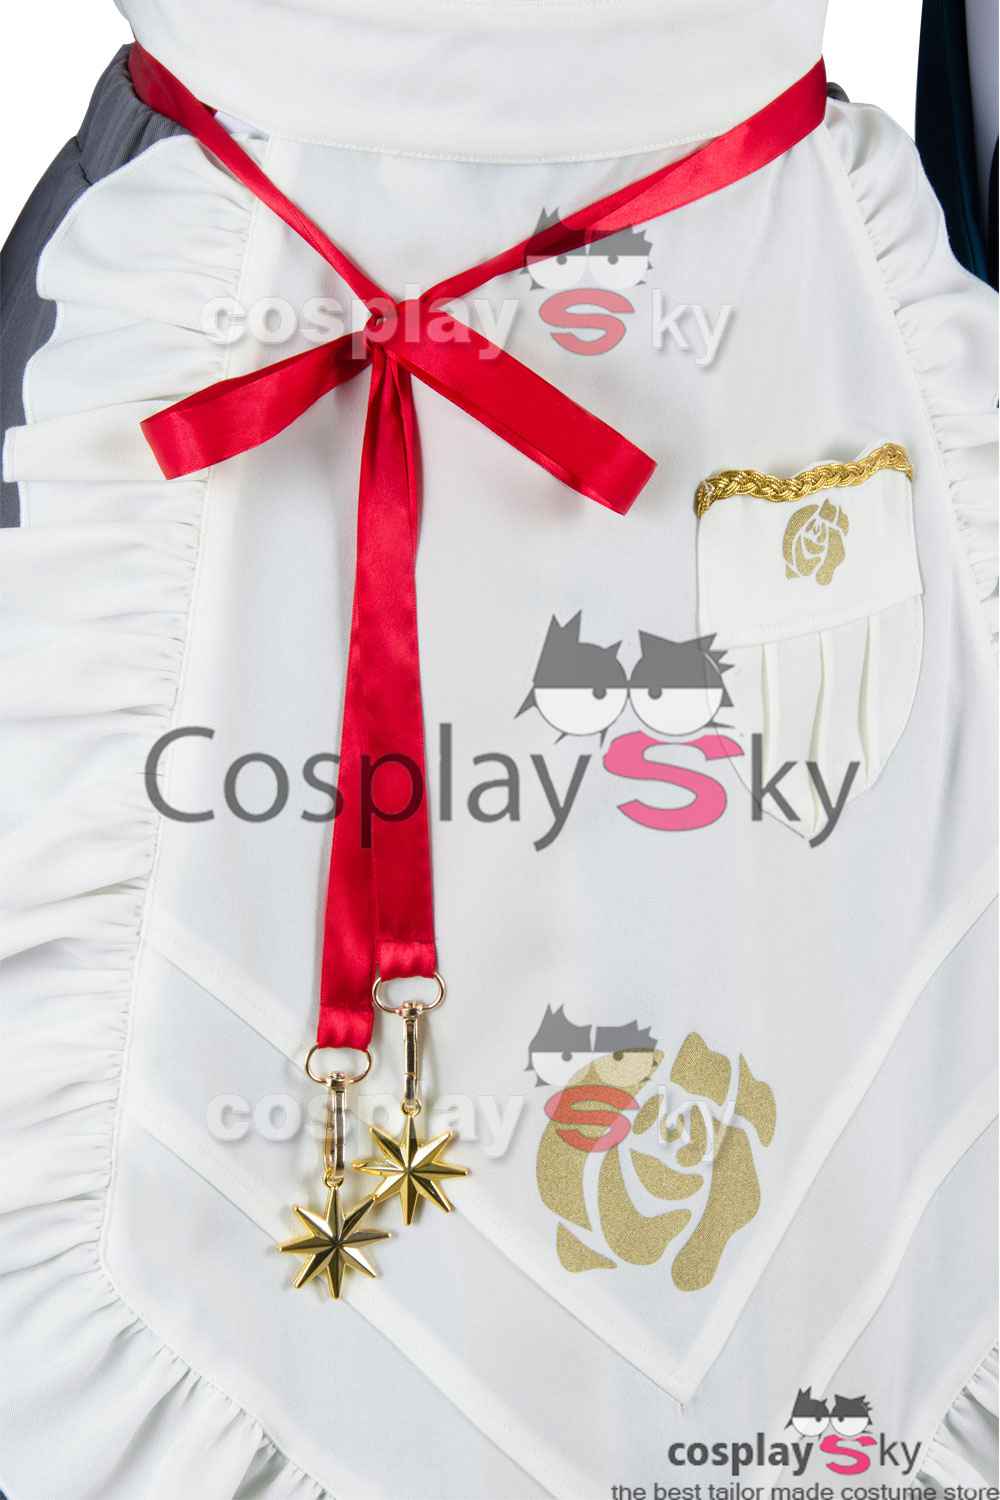 Rozen Maiden Sui sei Seki Suiseiseki Kimono Cosplay Costume